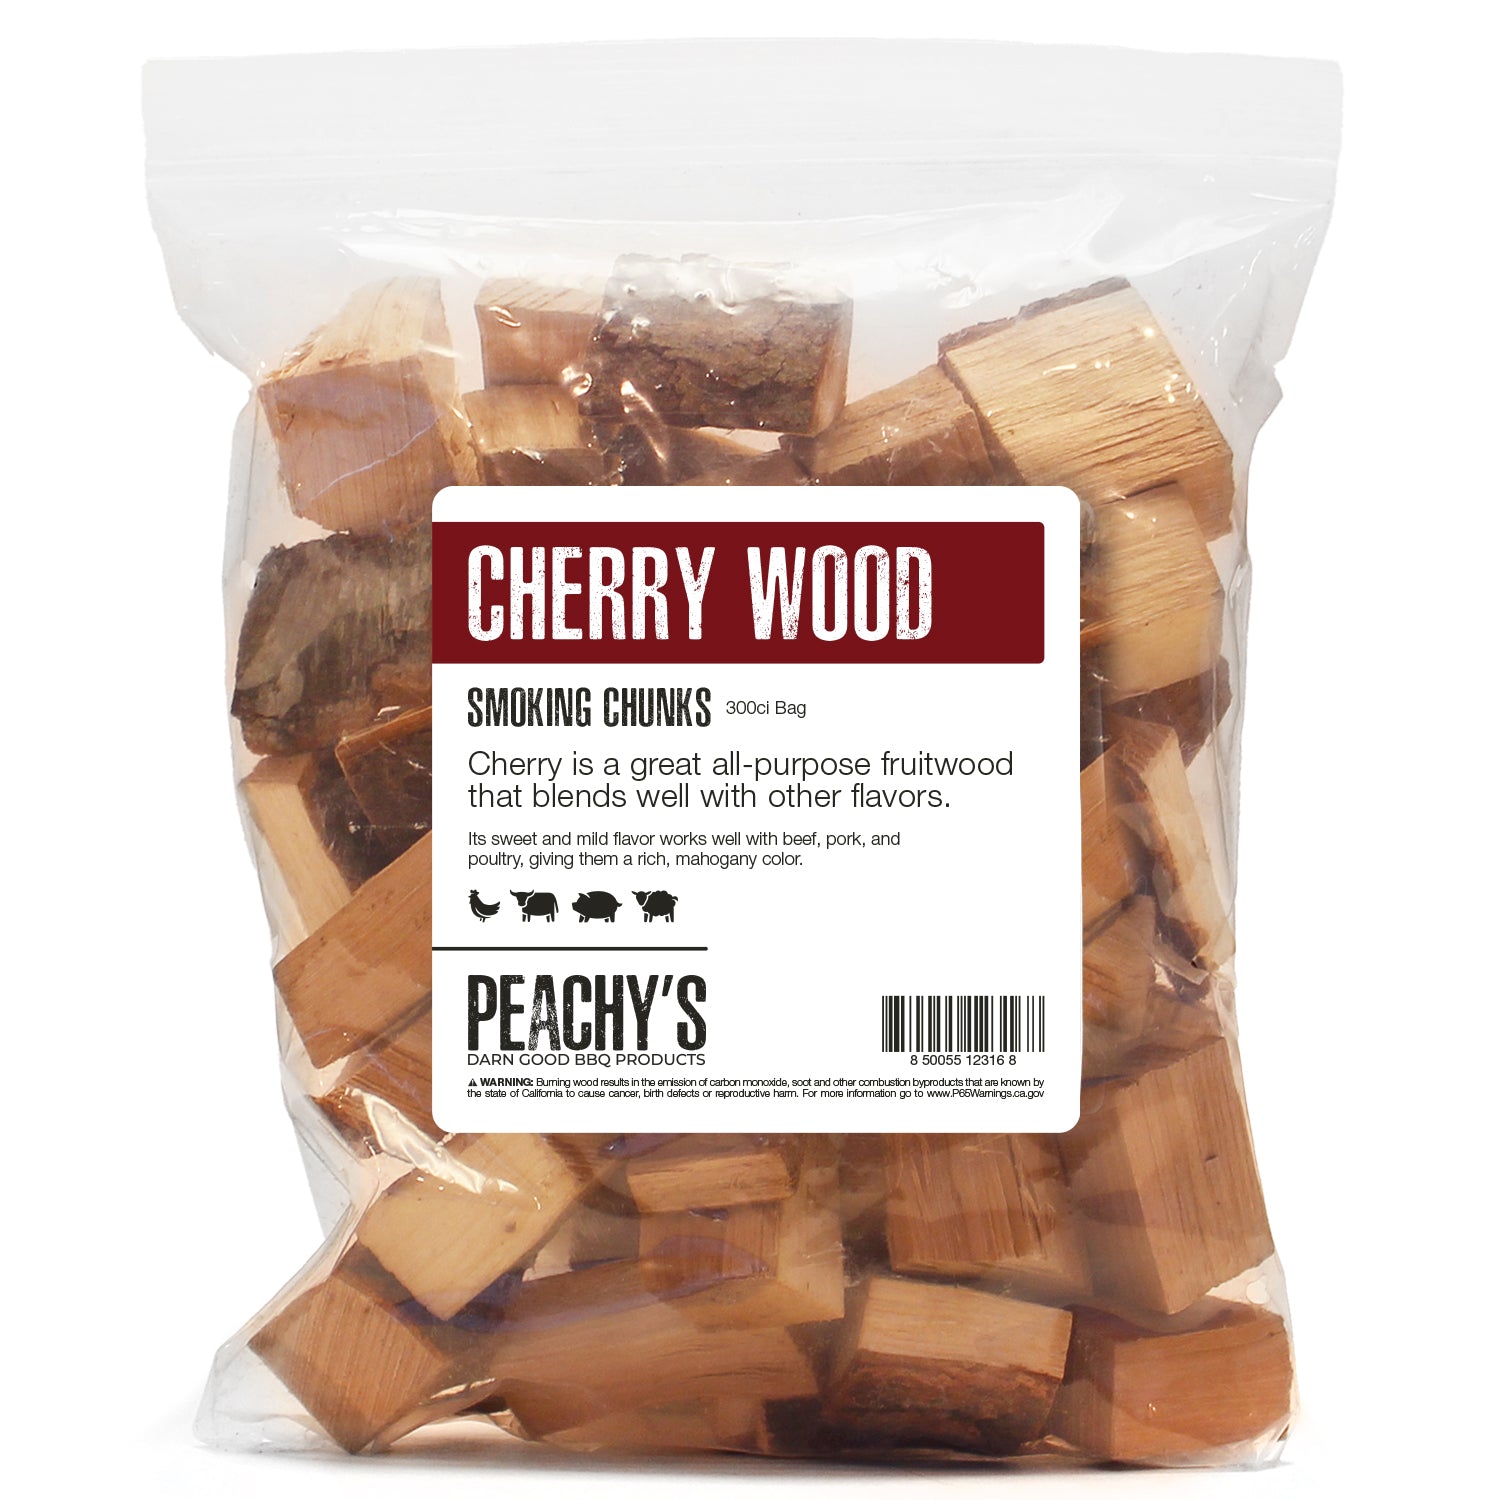 CHERRY Chunks | 300ci Bag of Premium Smoking Woods by PEACHY'S